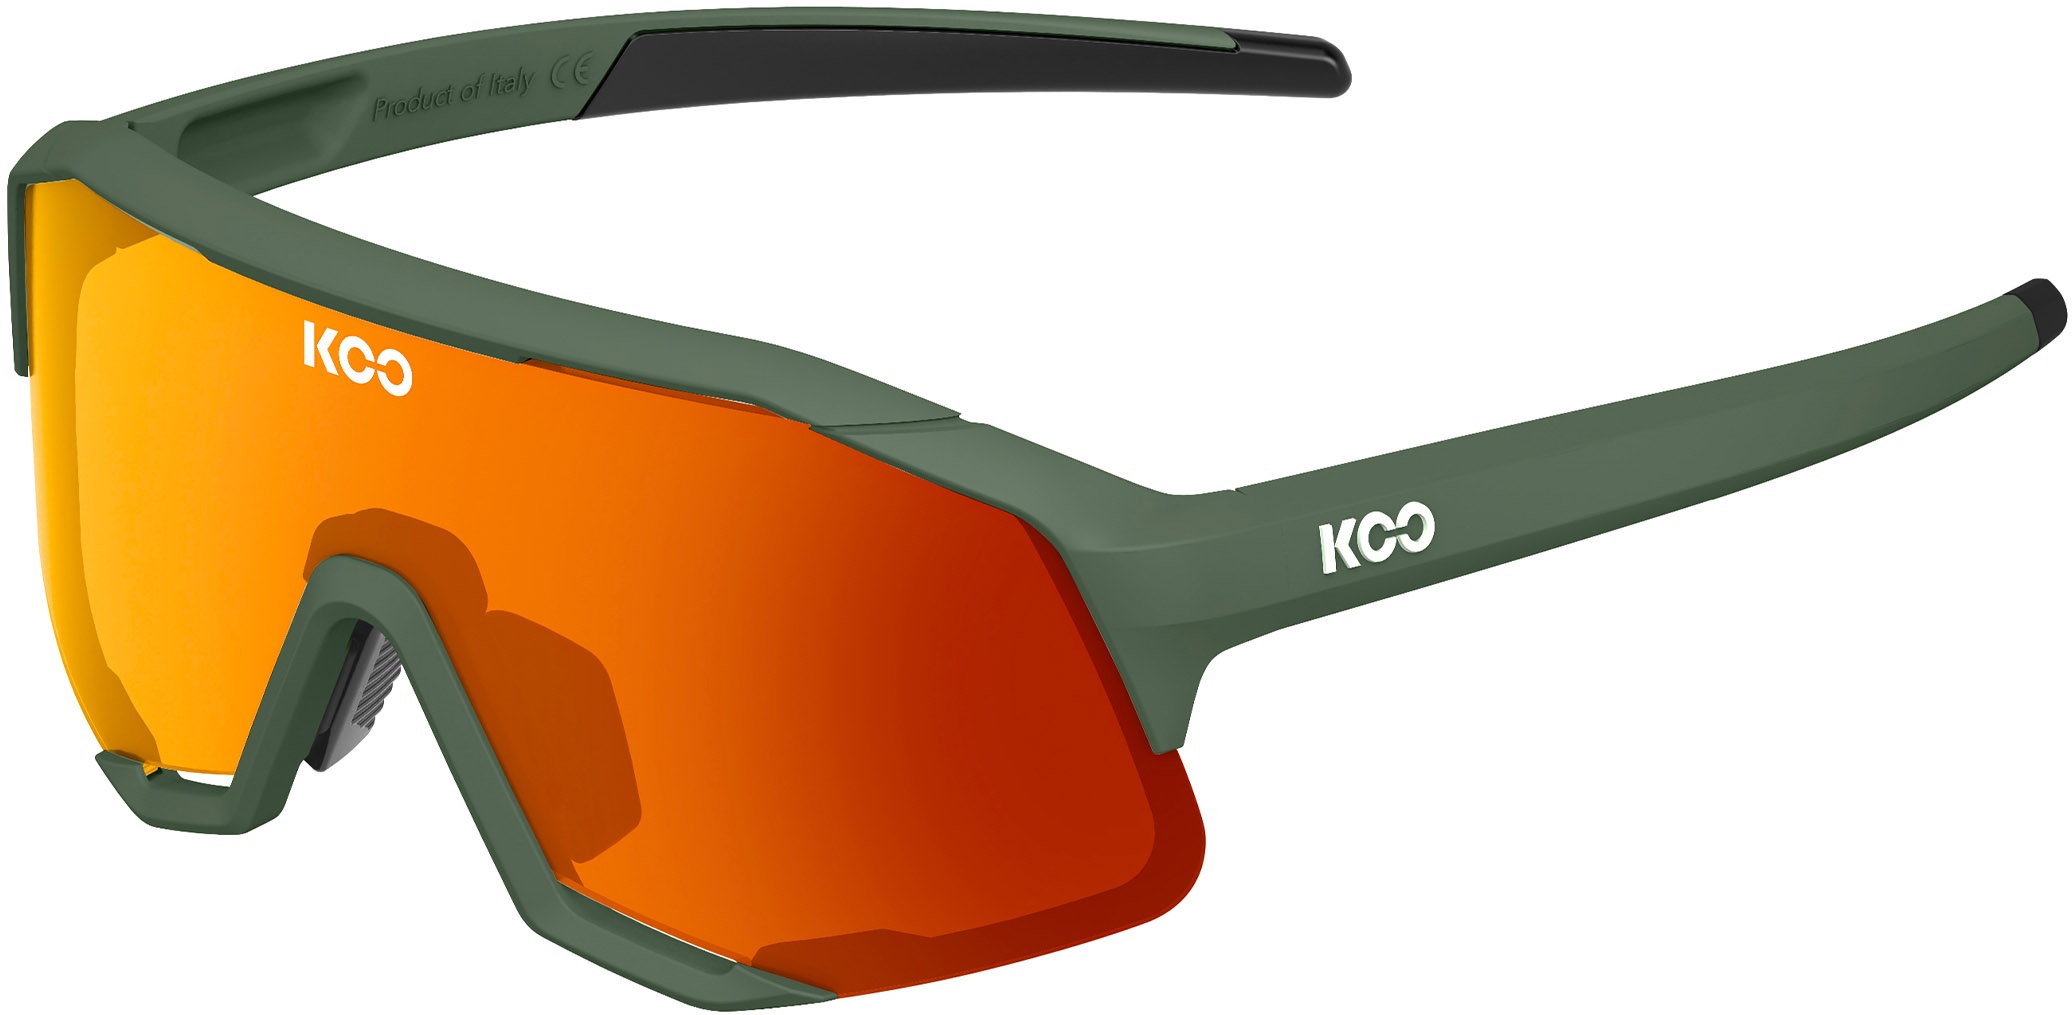  - KOO Demos Cykelbriller - Grøn/Orange